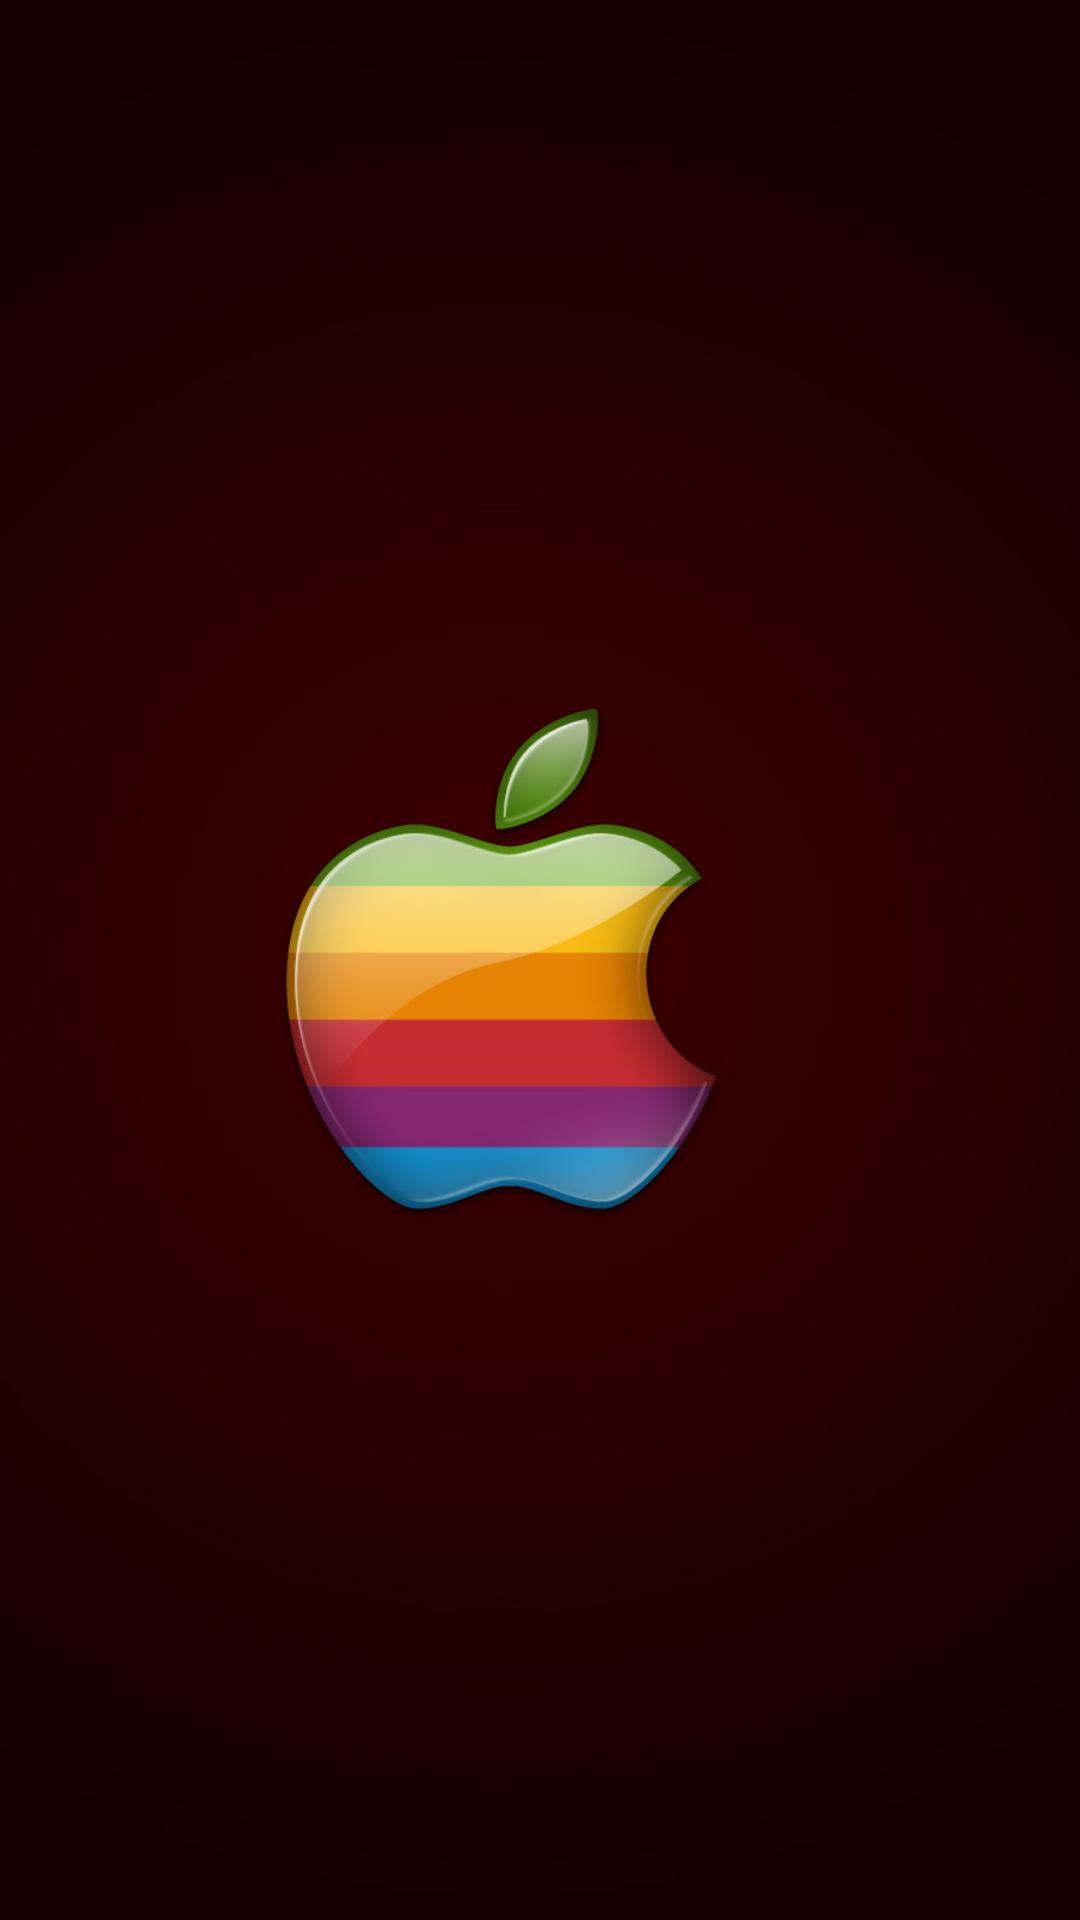 35 Gambar Apple Logo Wallpaper Hd Iphone 7 terbaru 2020